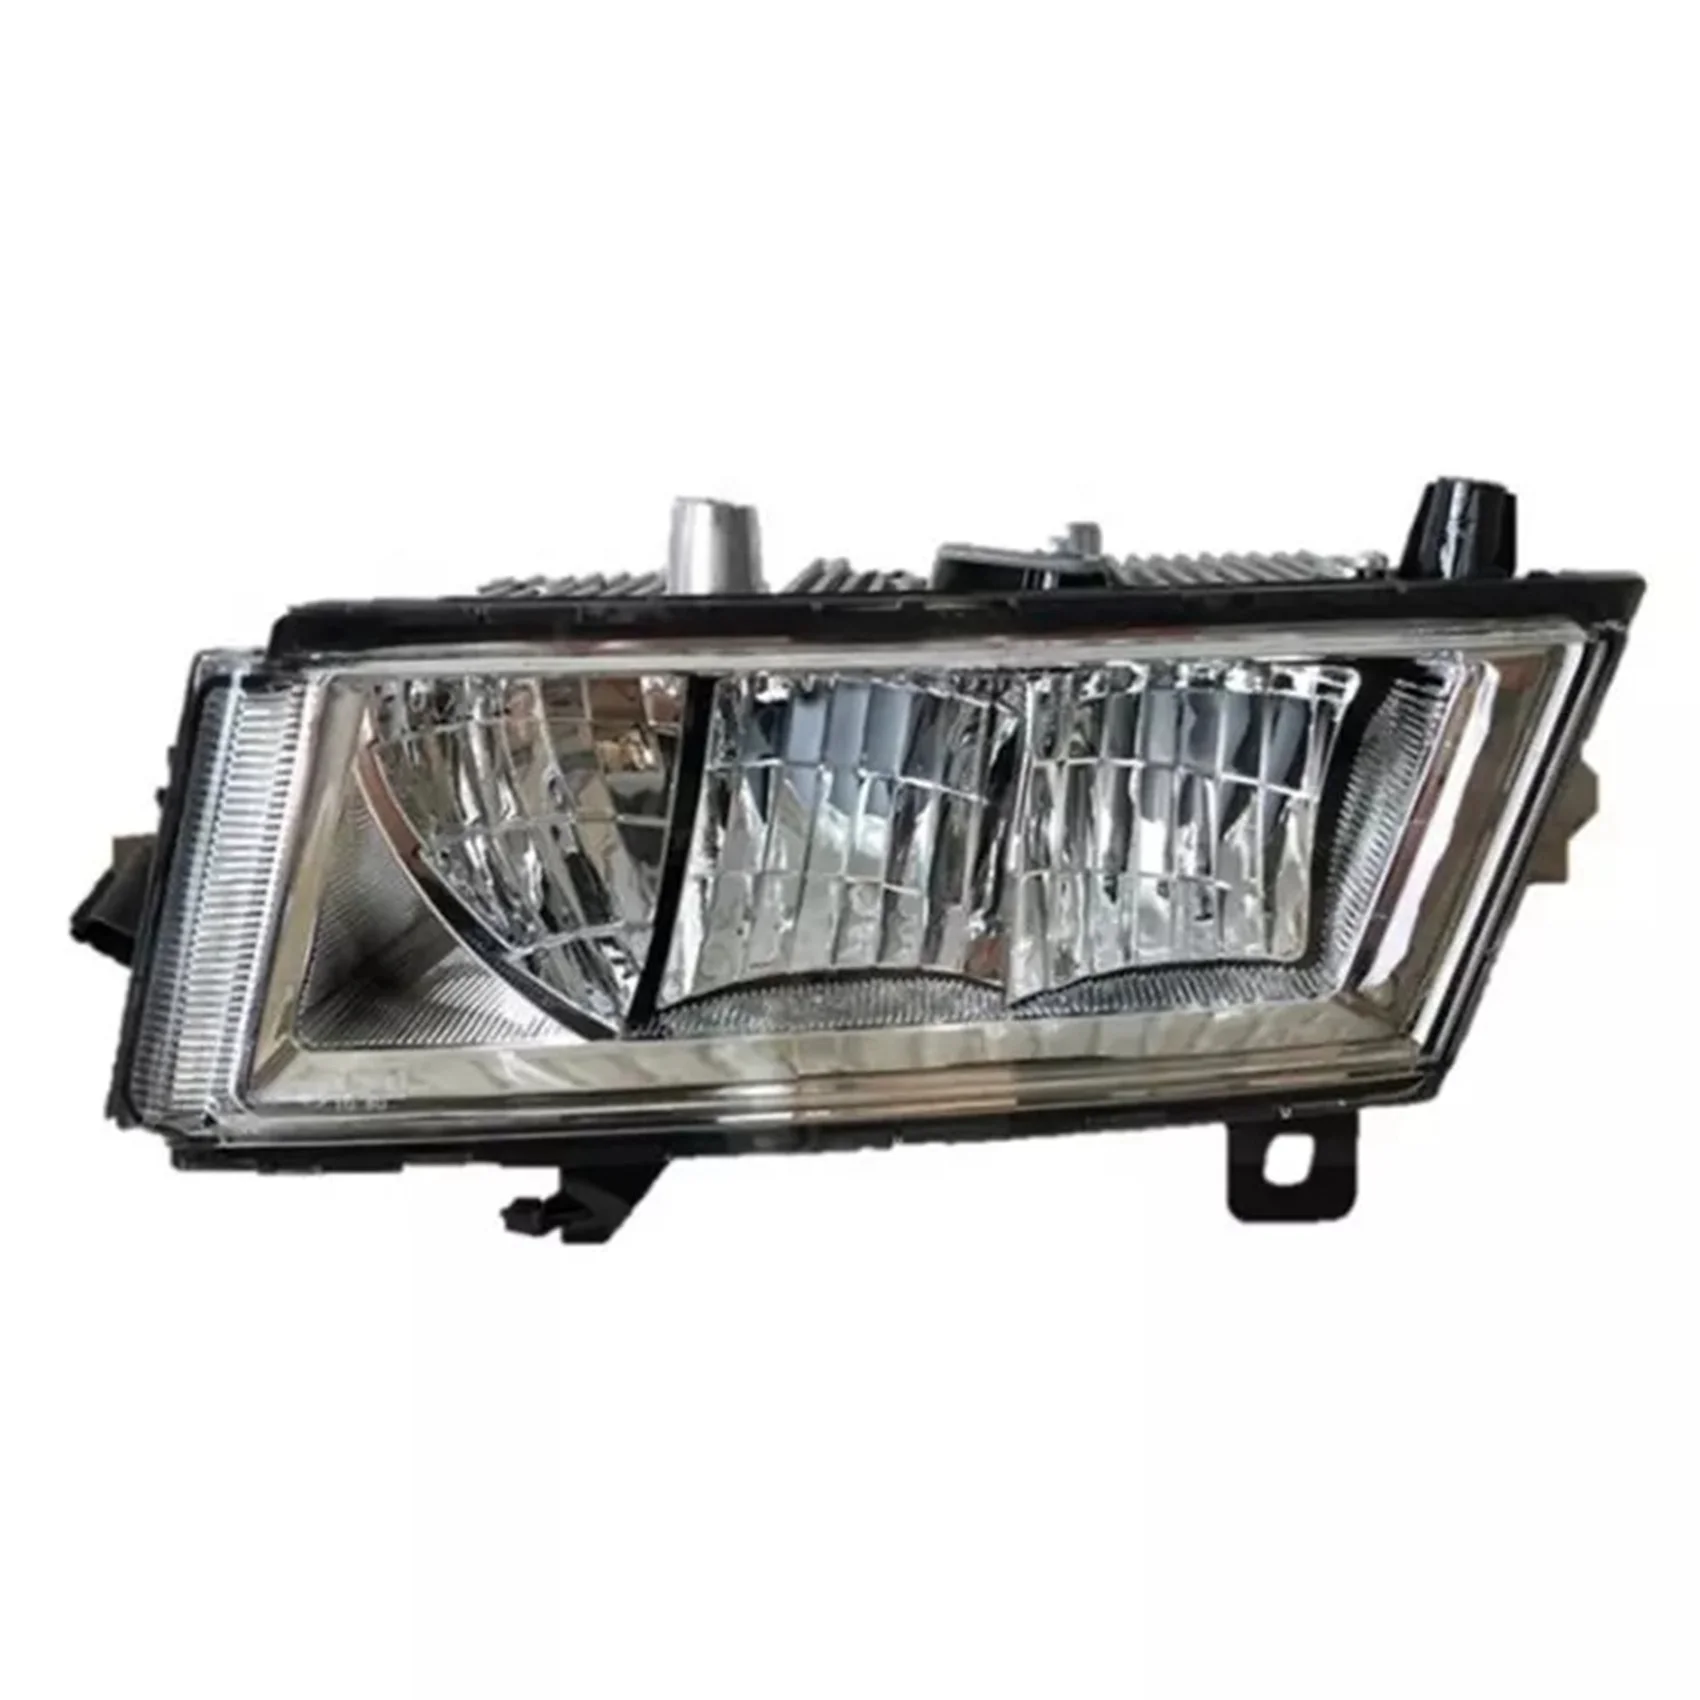 

Front Left 24V LED Fog Lamp Clearance Lights for Scania R650 G500 S730 S500 P500 Truck 2552717 2552714 L